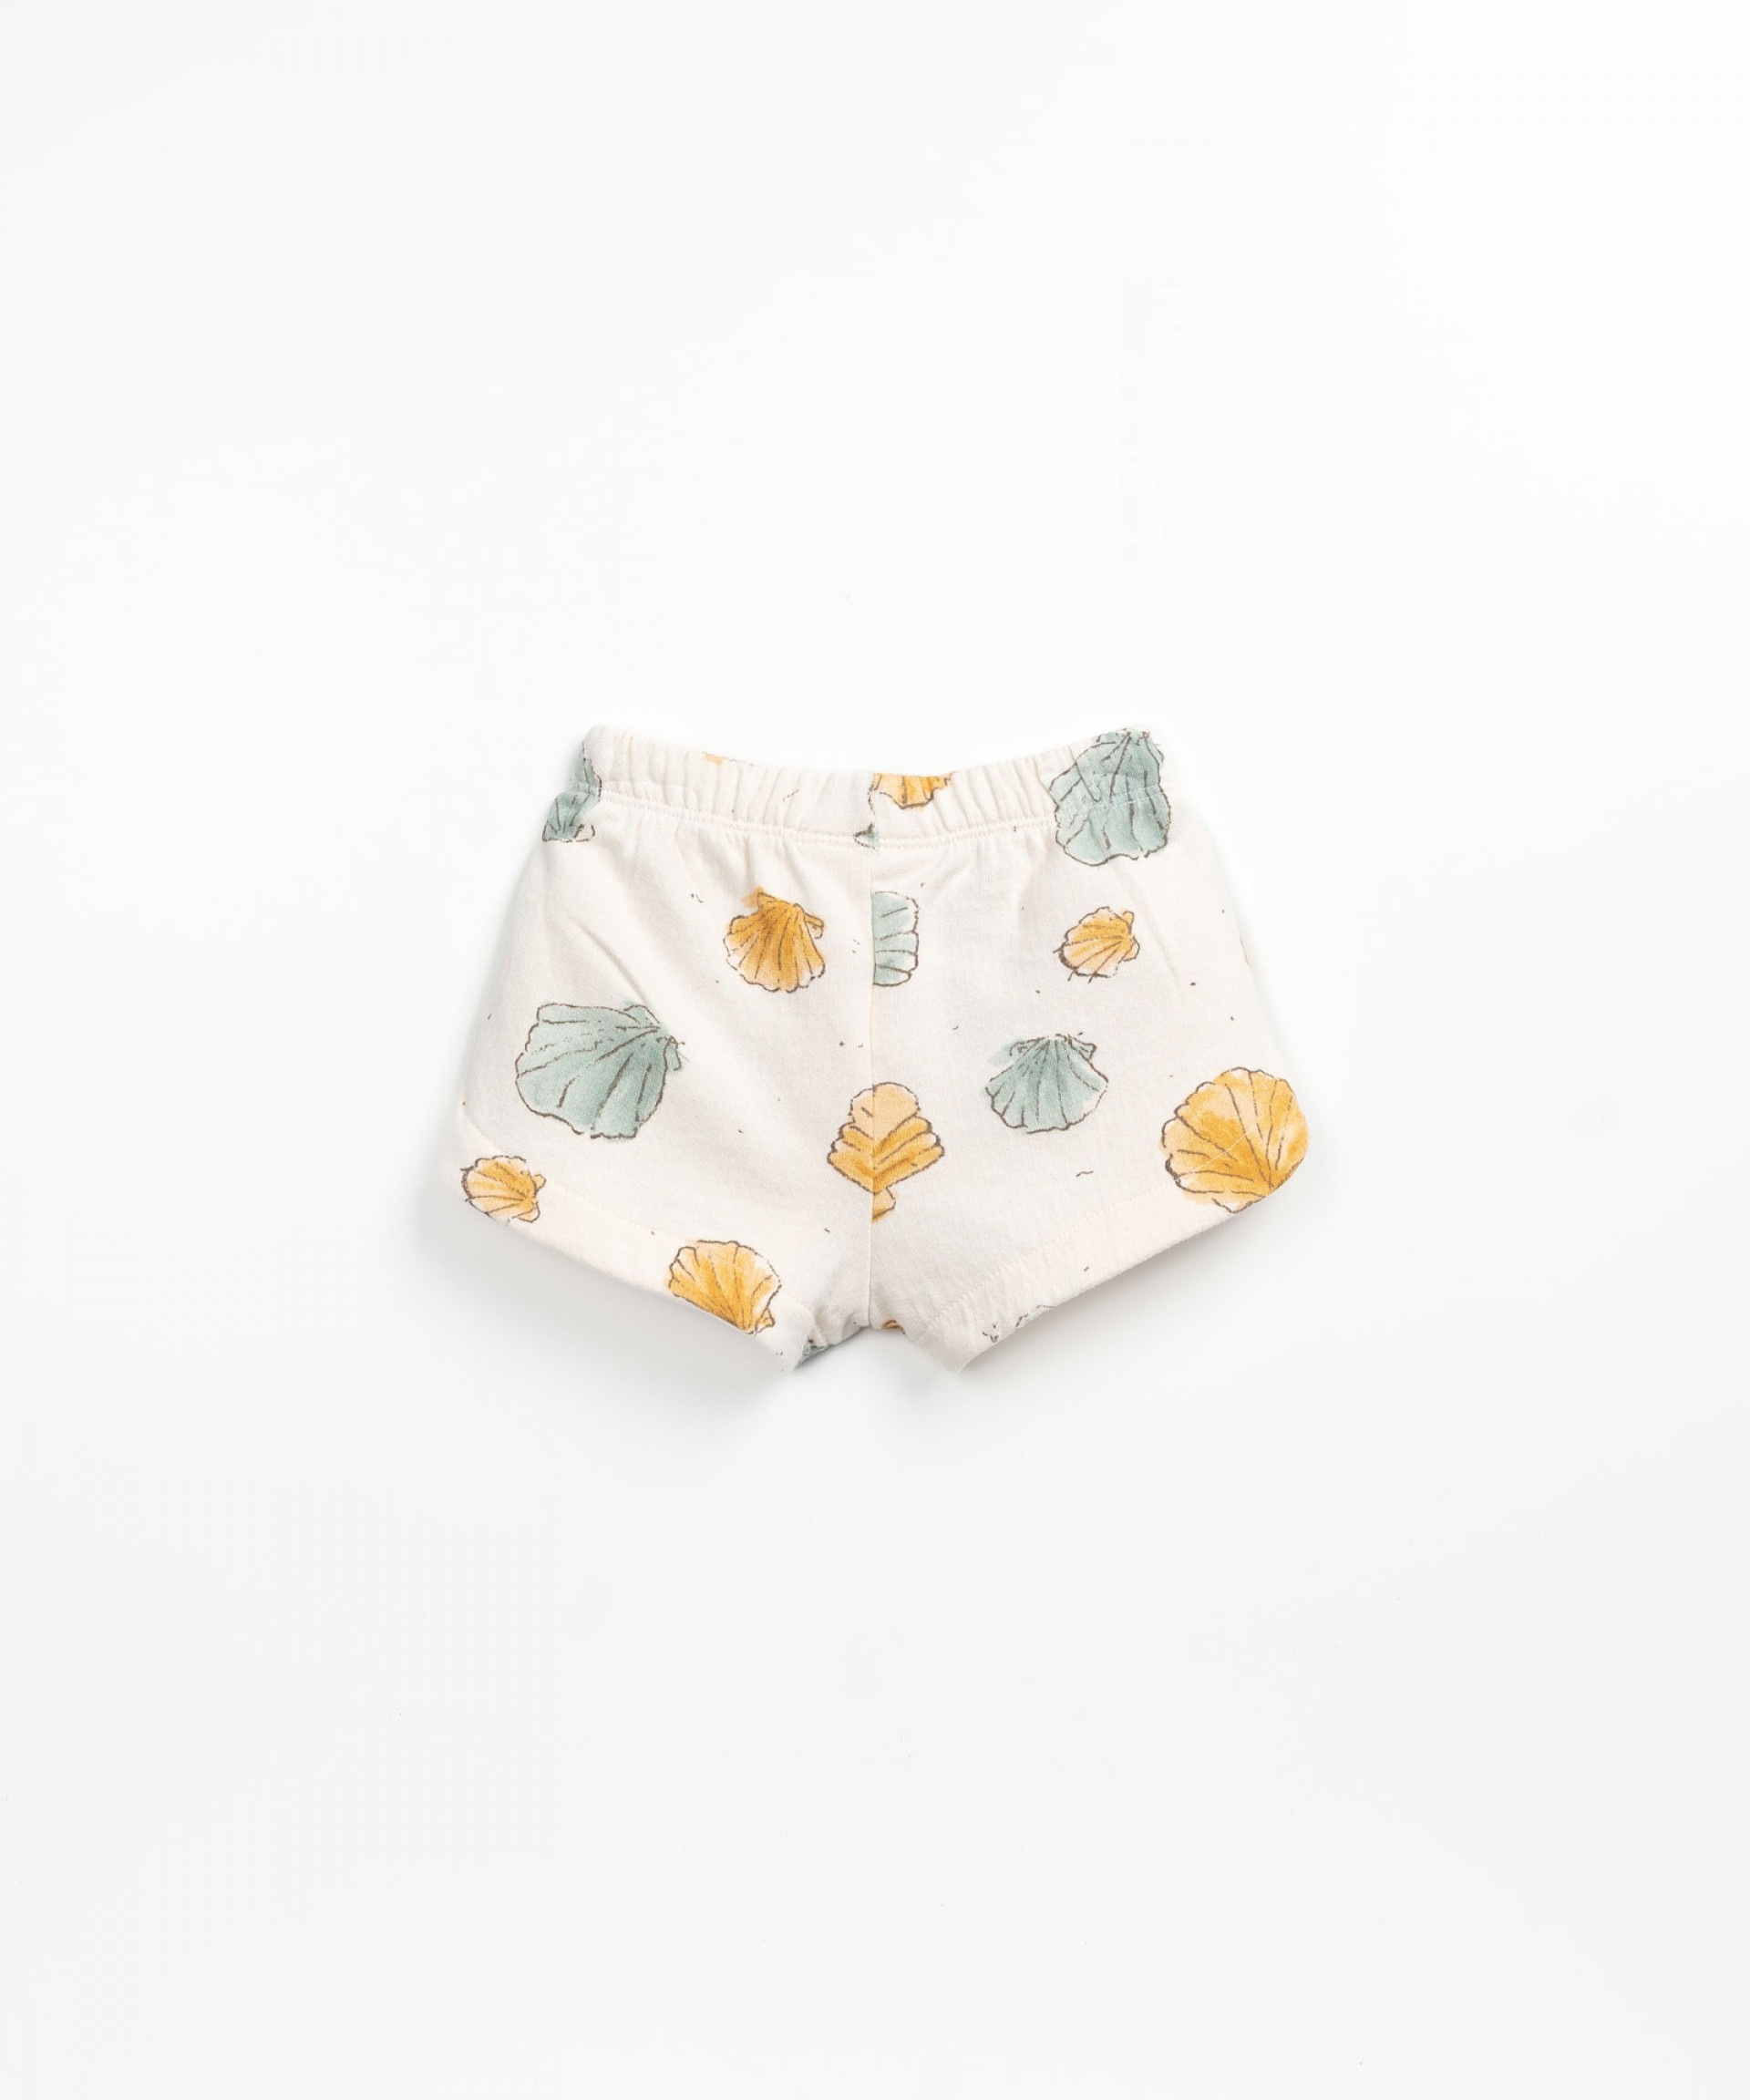 Calo com estampado de conchas | Textile Art